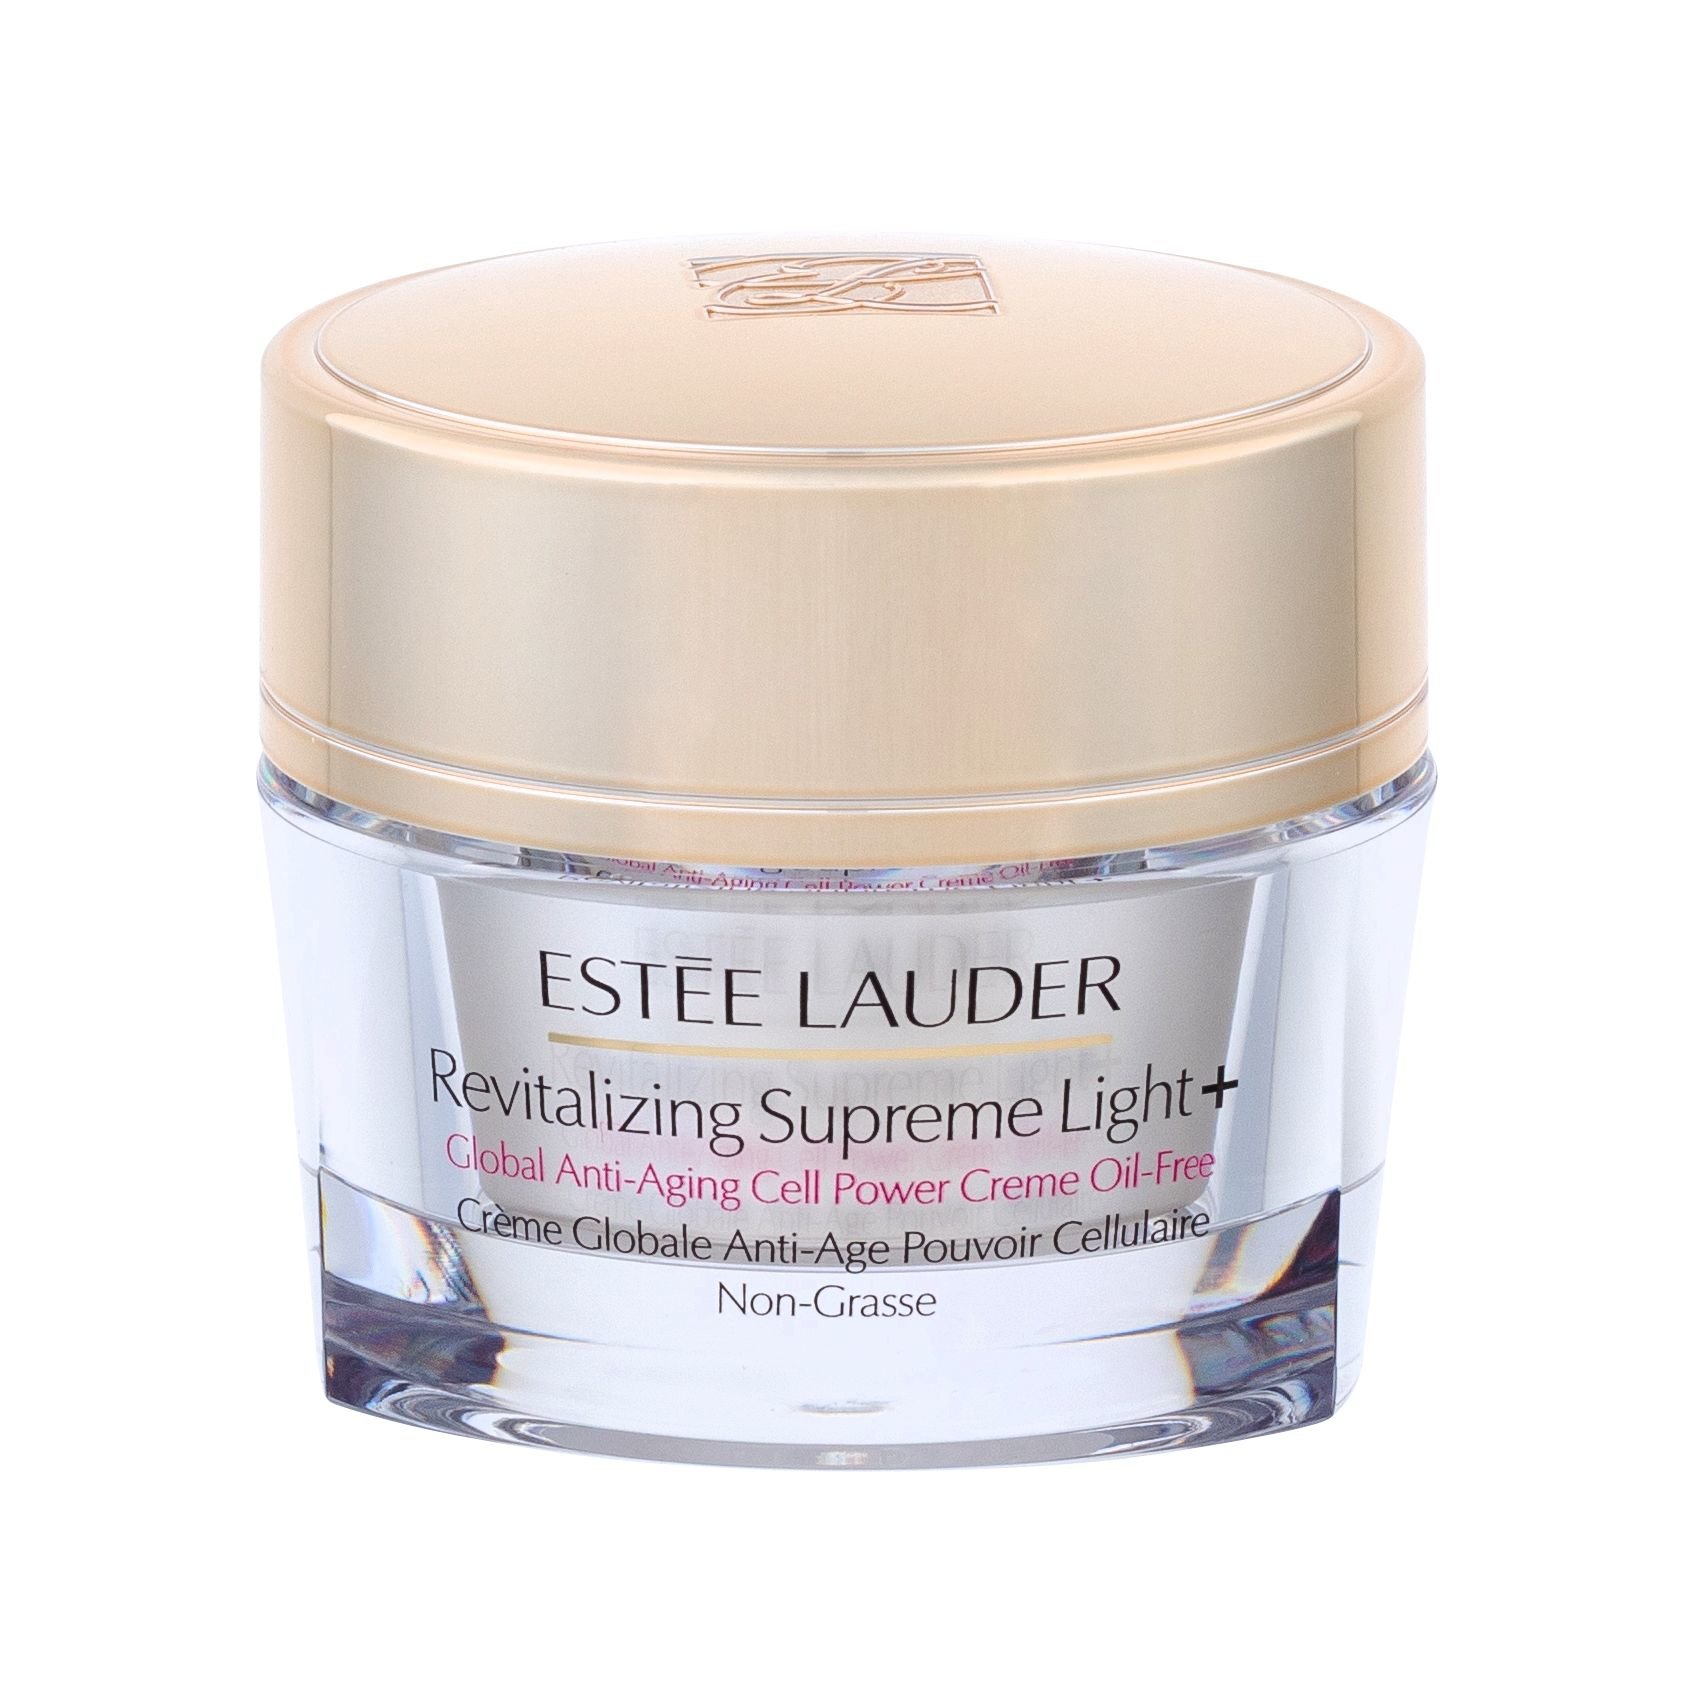 Esteé Lauder Revitalizing Supreme Light+ Global Anti-Aging Cell Power Creme Oil-Free 30ml dieninis kremas